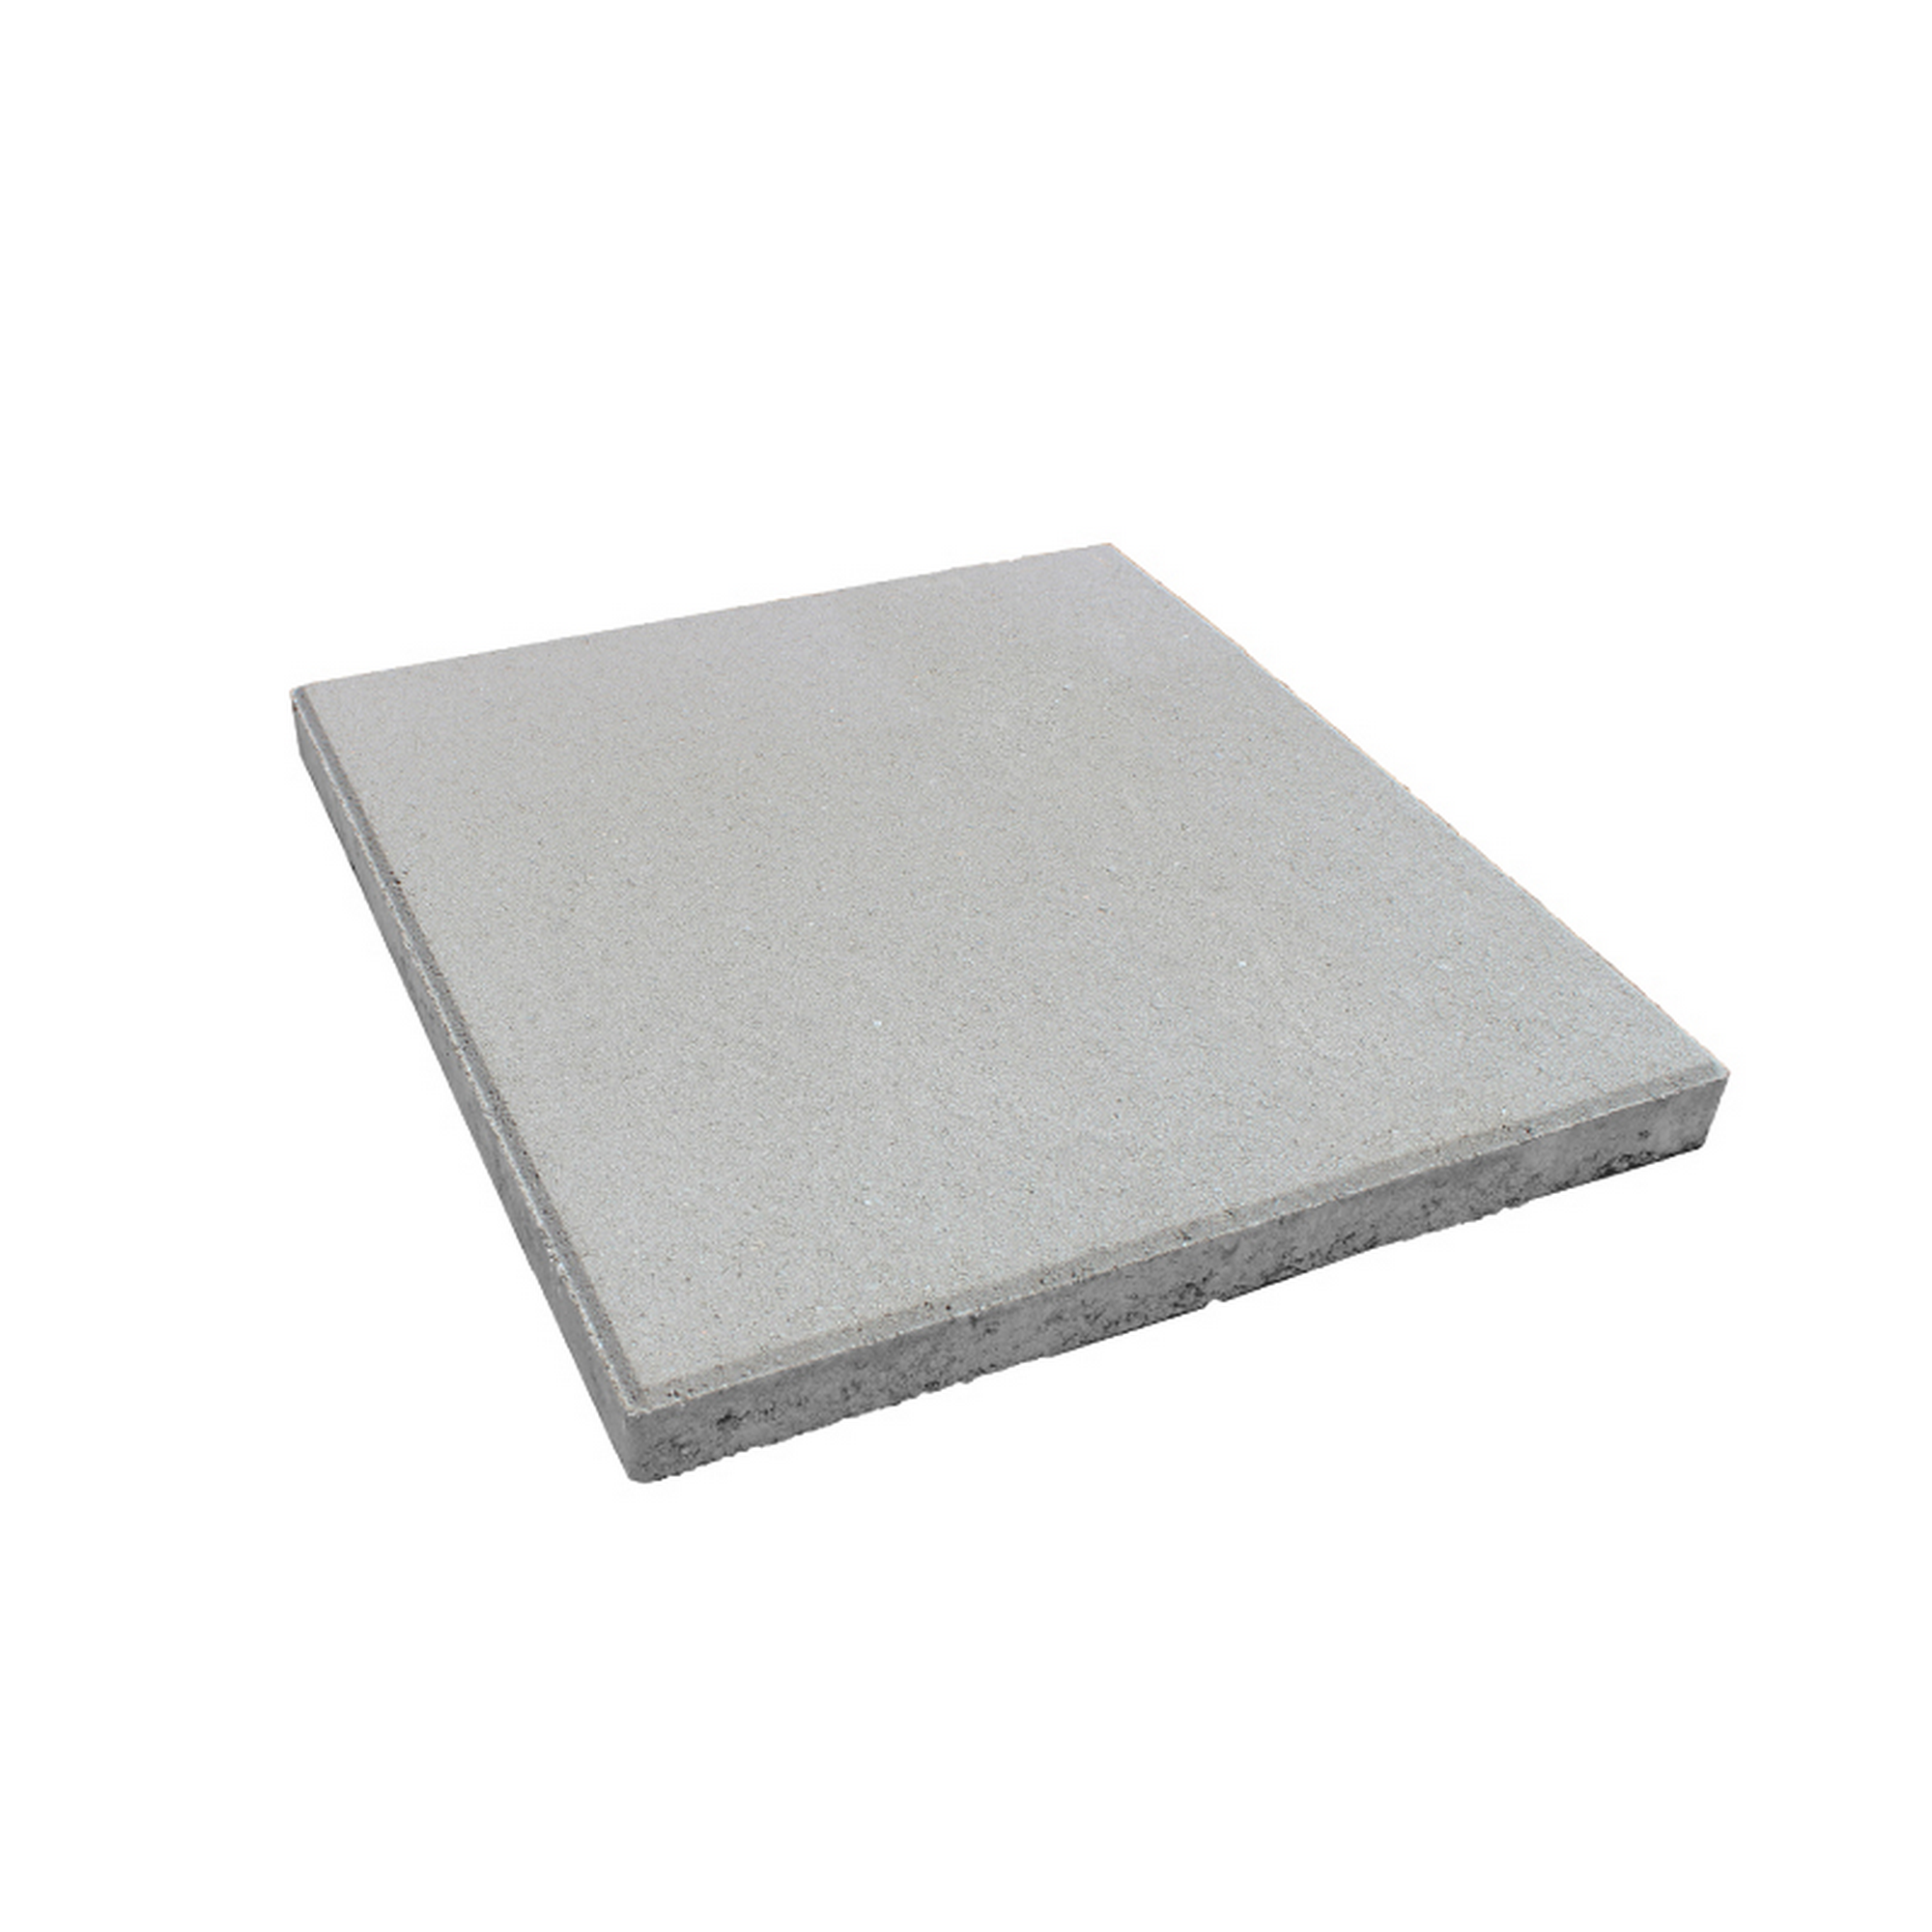 Diephaus Betonplatte grau 30 x 30 x 4 cm